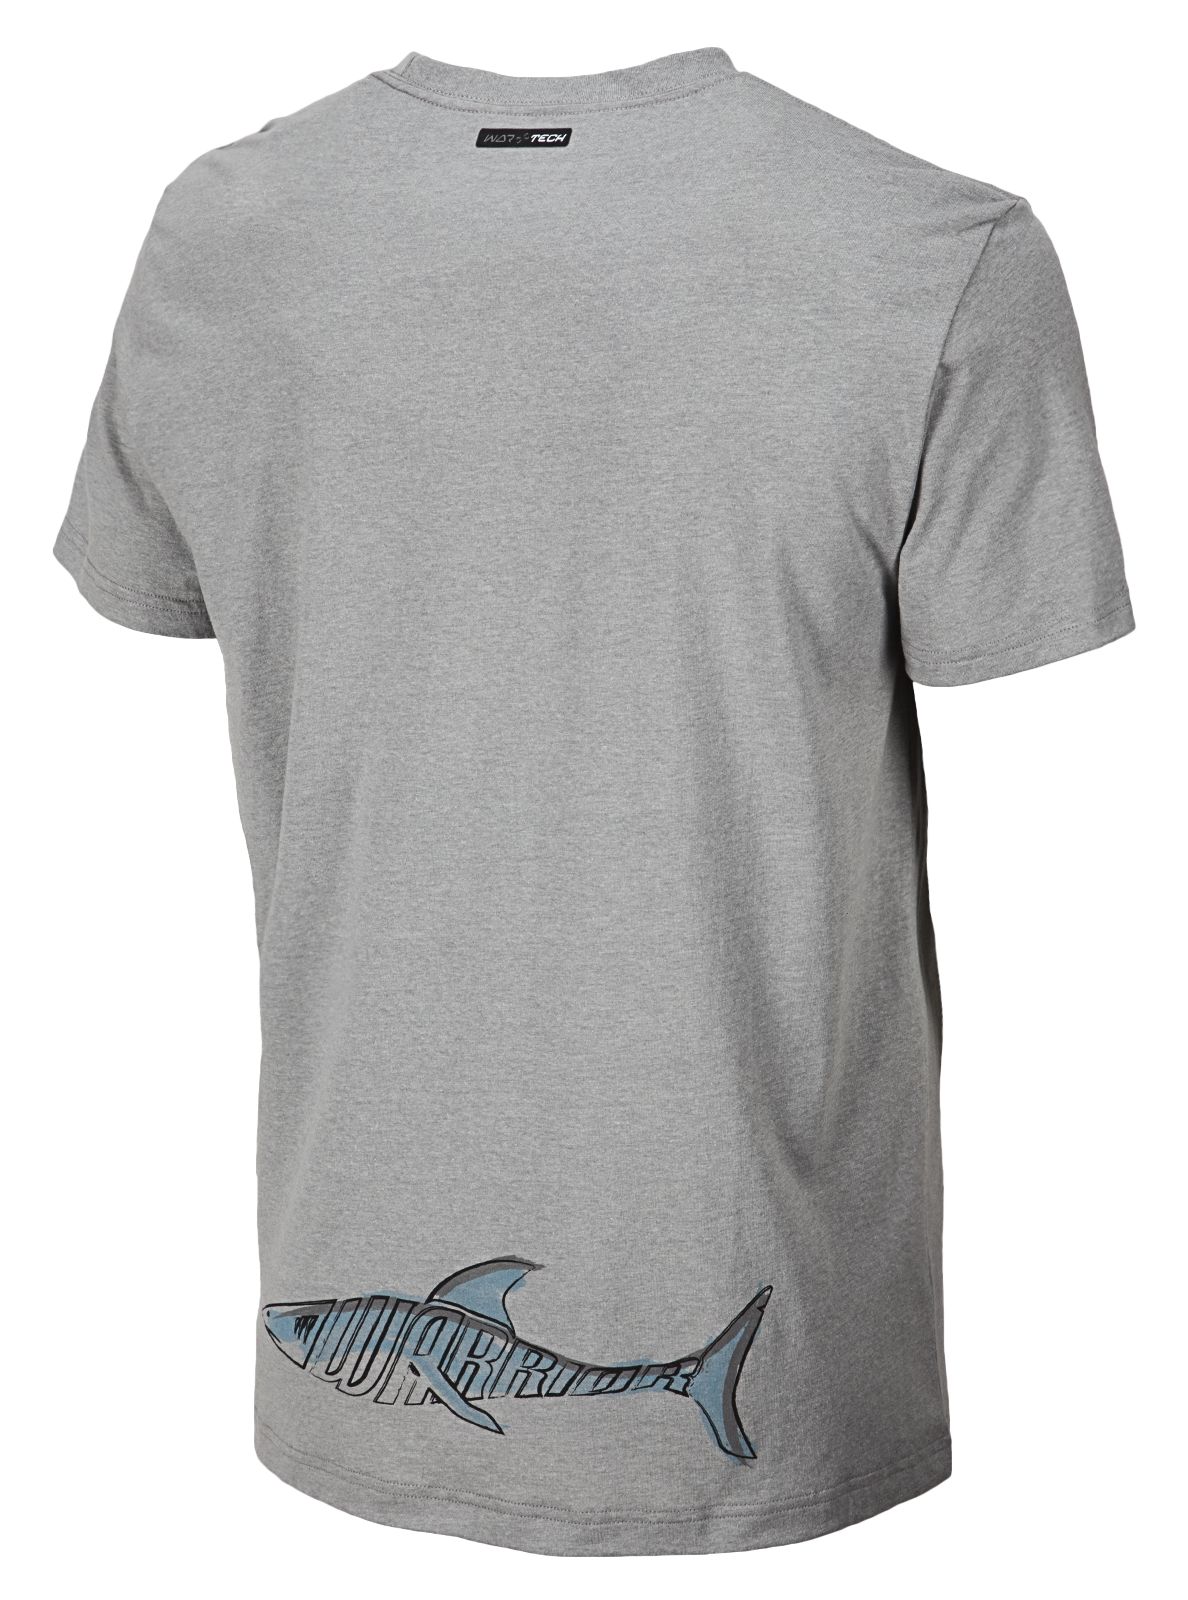 Shark 50/50 Tee, Athletic Grey image number 0